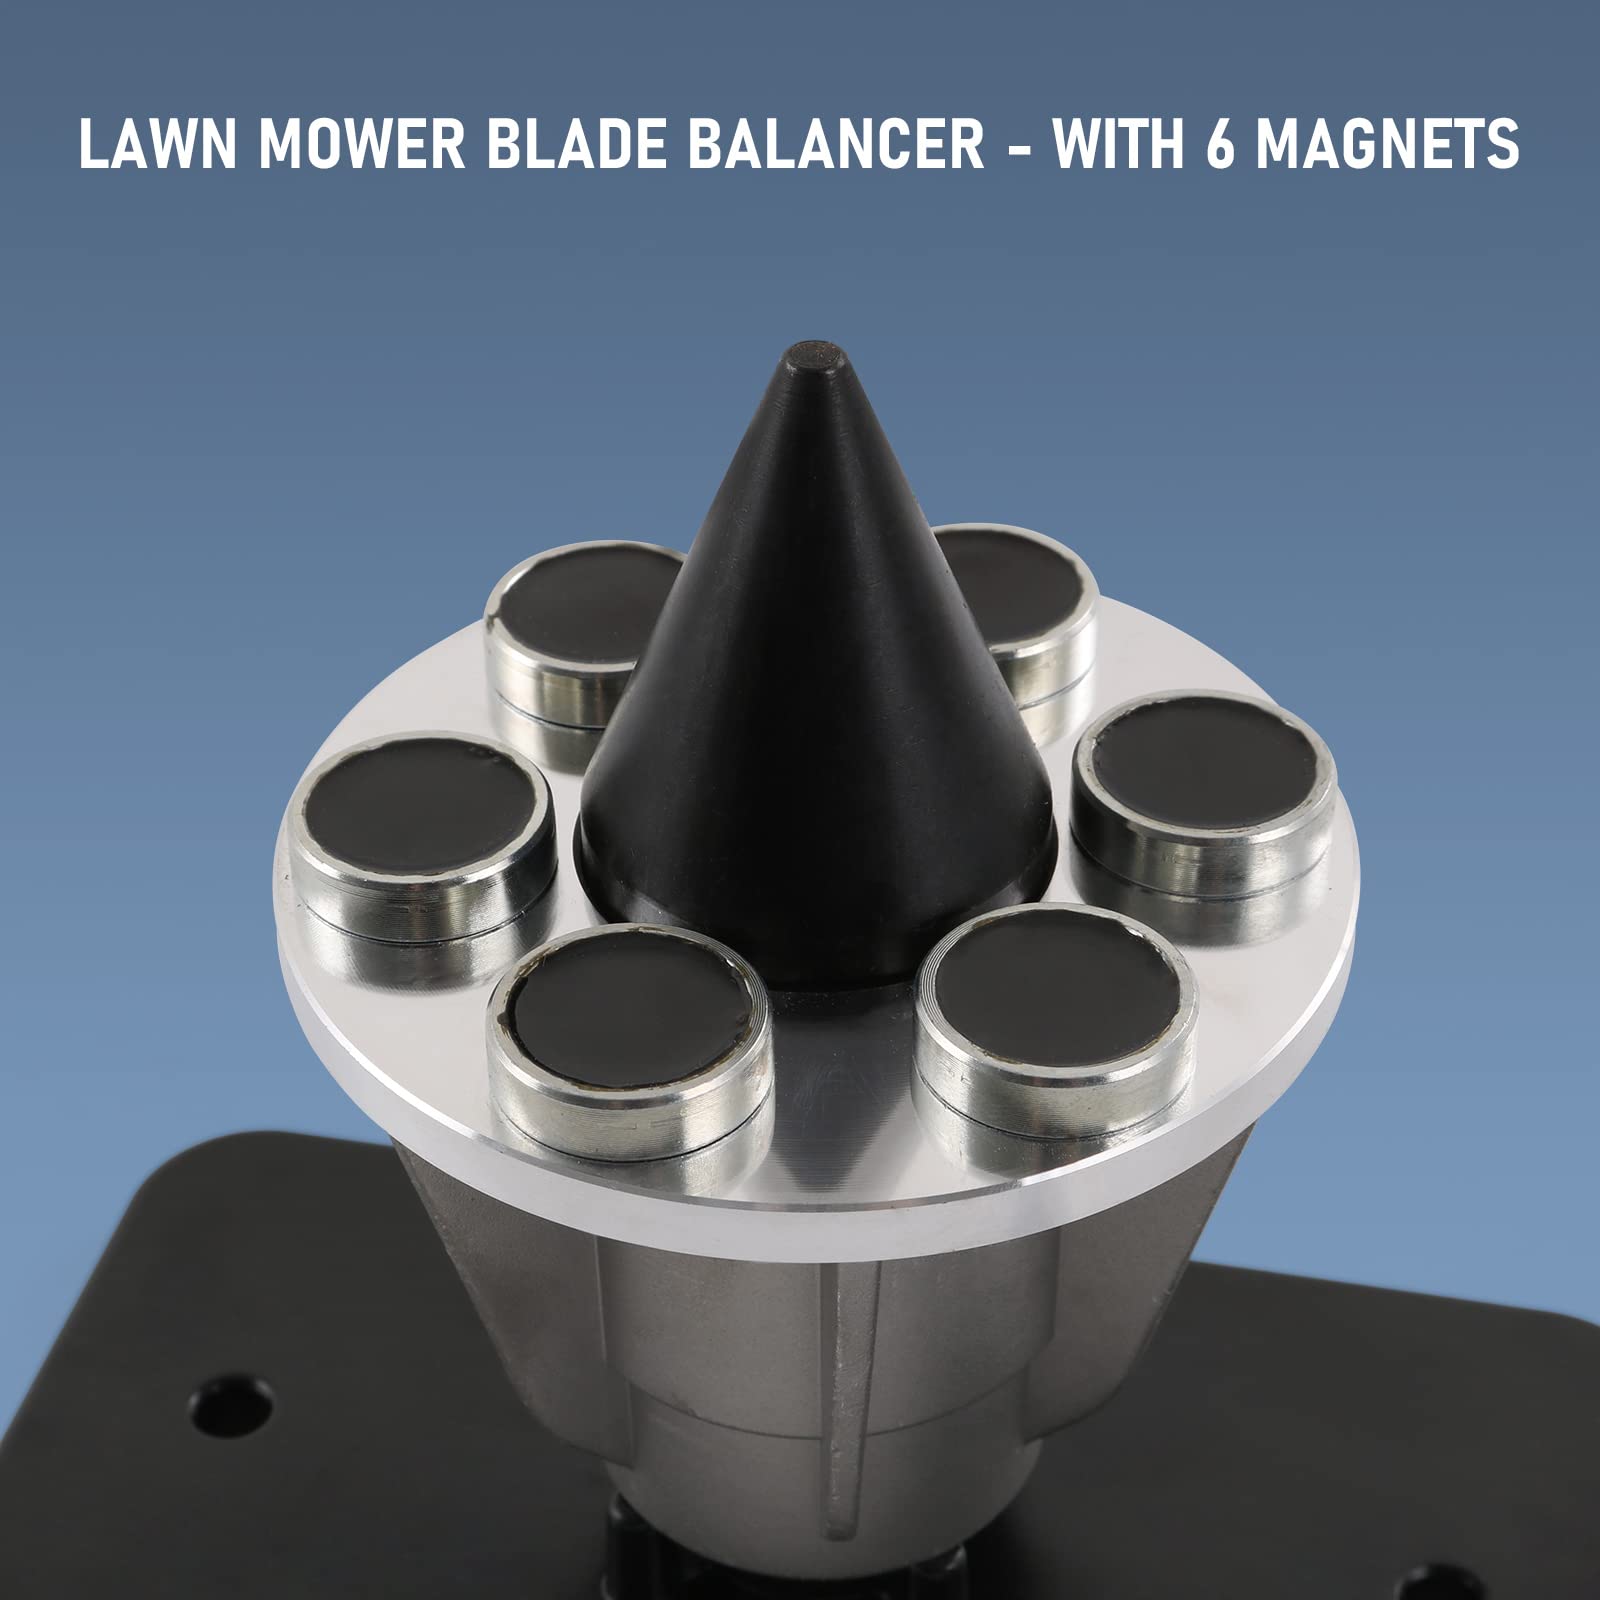 GSTP Lawn Mower Blade Balancer Replaces 42-047 339075B Magnetic Wall Mount Blade Balancer